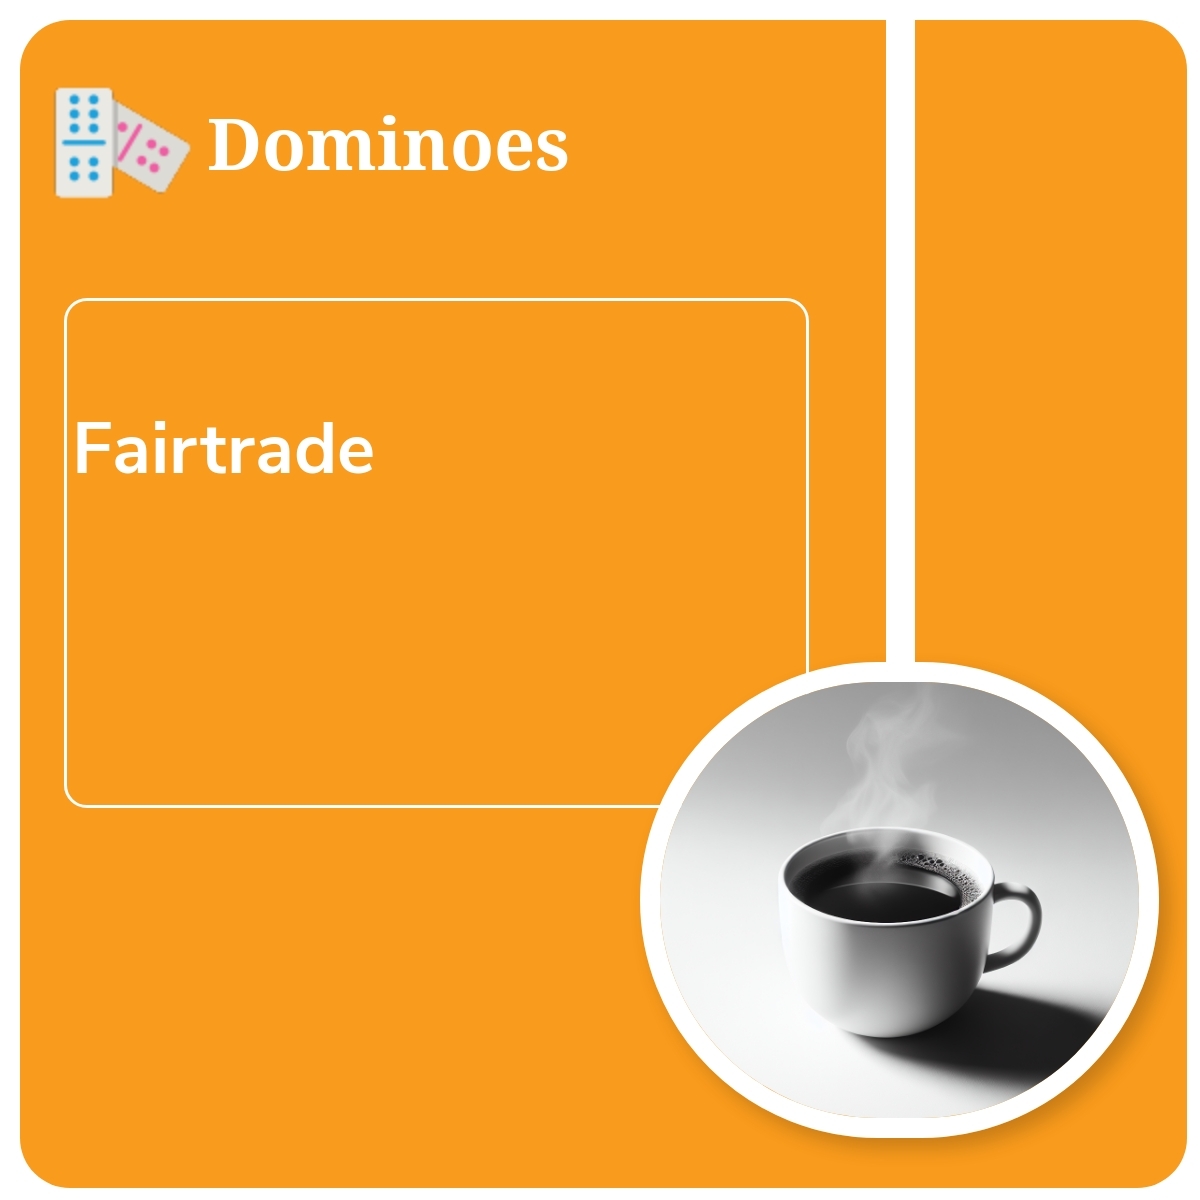 Dúradáin - Cluiche 1: Fairtrade